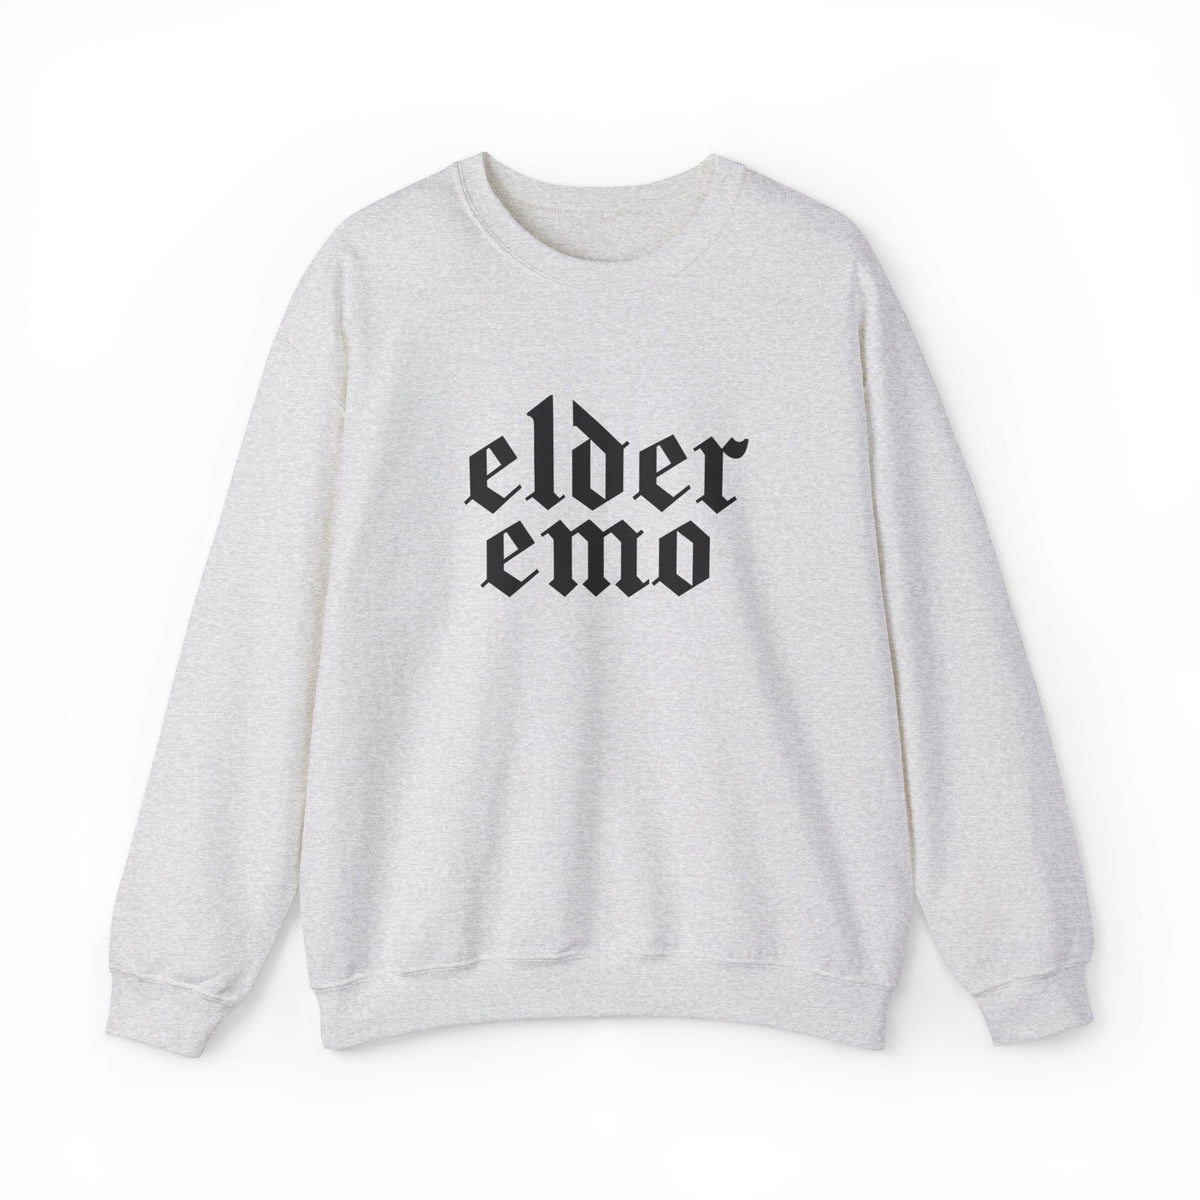 Elder Emo Gothic Font Crewneck Sweatshirt - Goth Cloth Co.Sweatshirt19919938128299425943